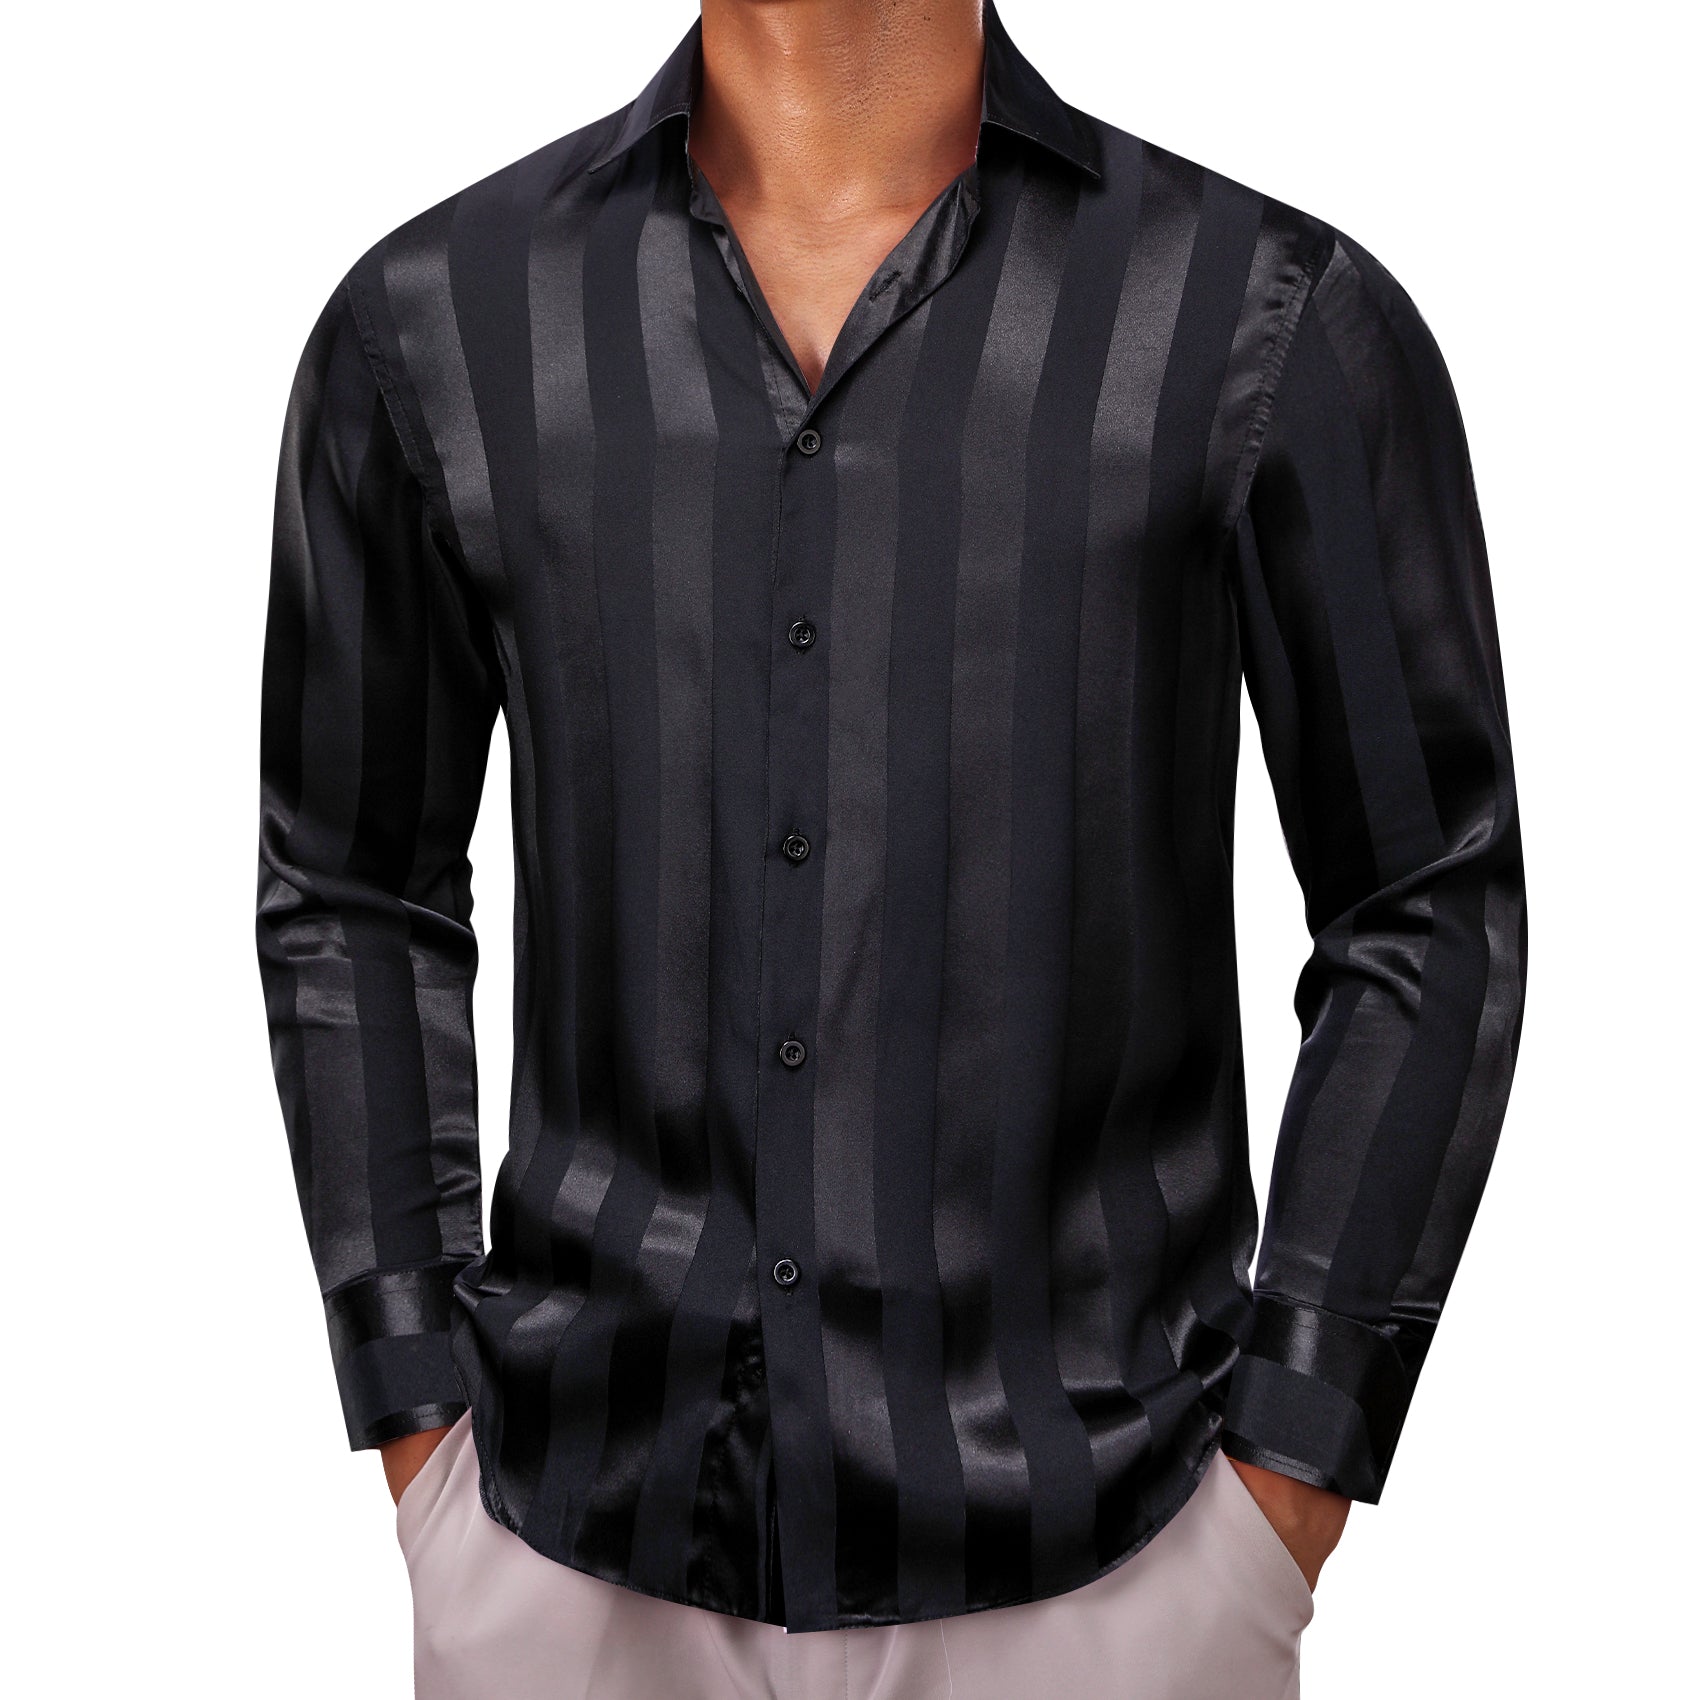 Barry.wang Black Striped Silk Men's Shirt